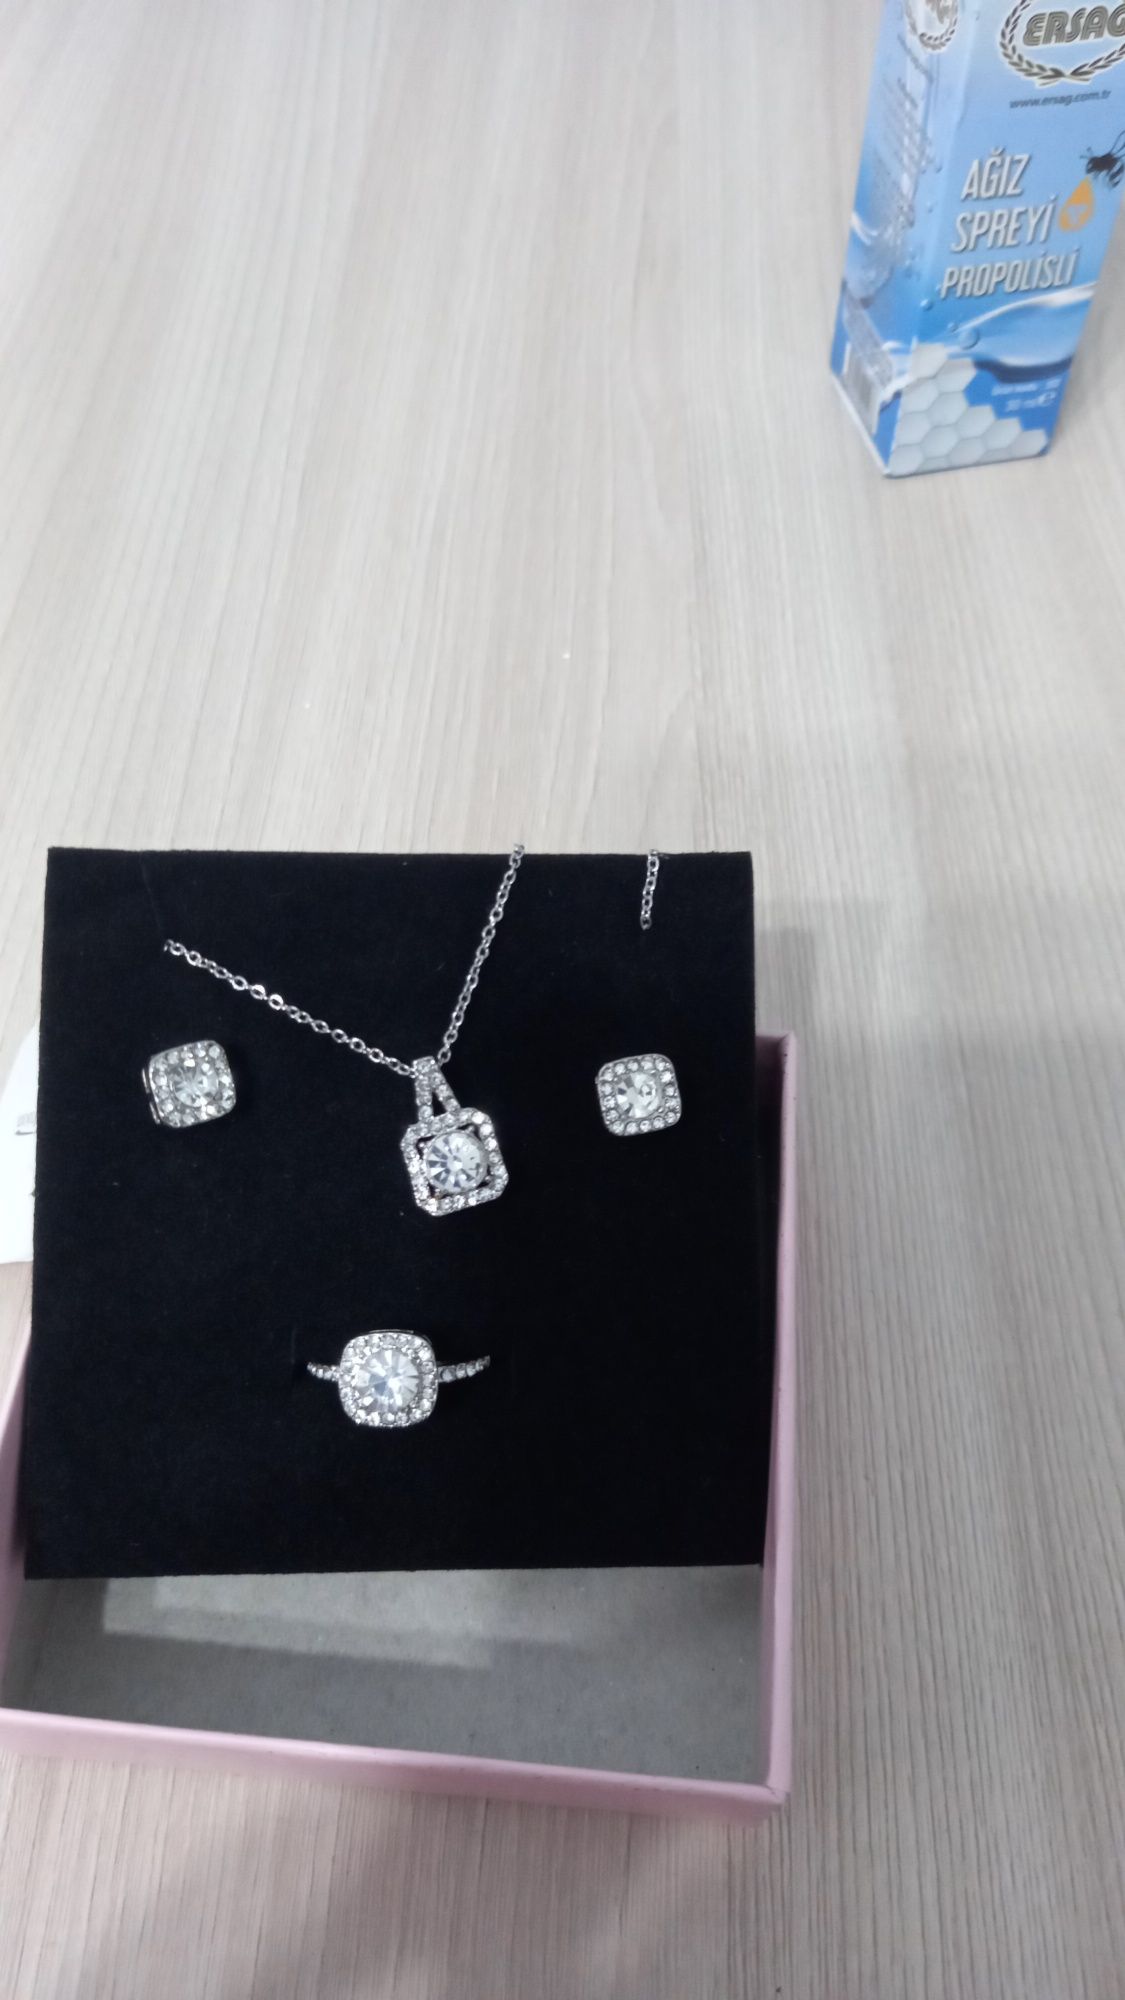 Комплект Premium jewellery медицинская сталь, кристаллы Swarovski